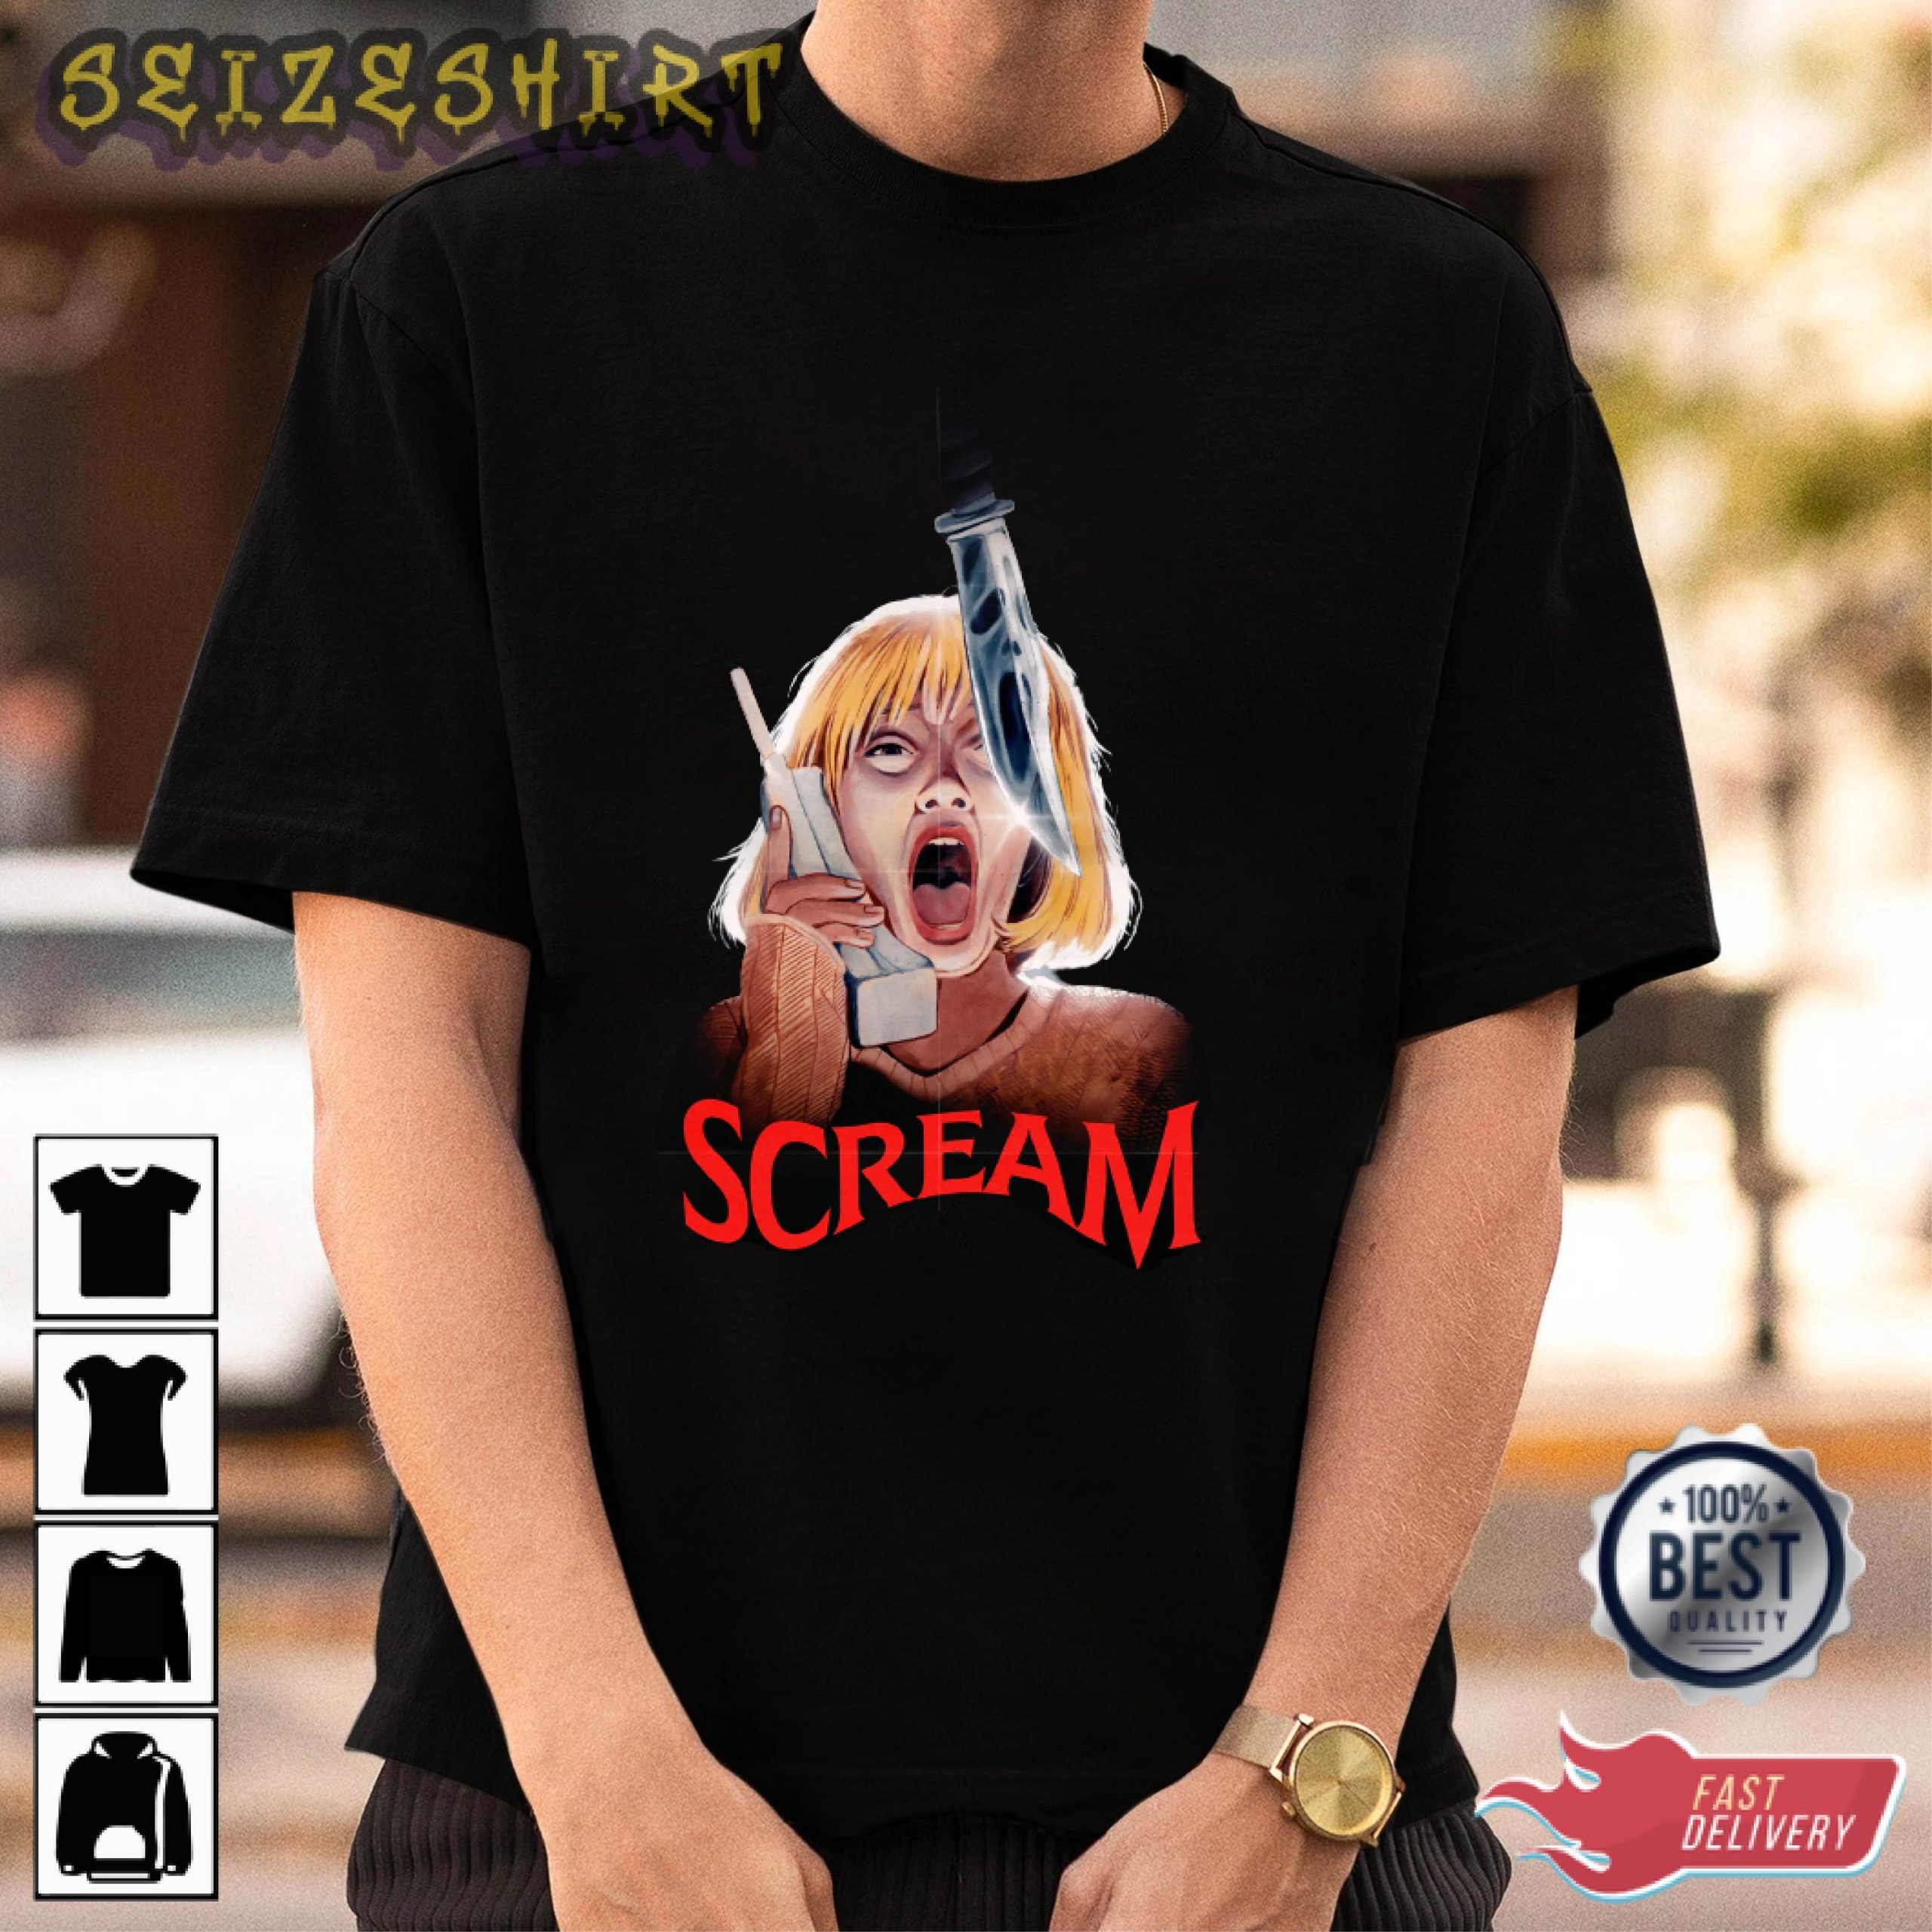 Harley Queen Scream Halloween Graphic Tee Long Sleeve Shirt